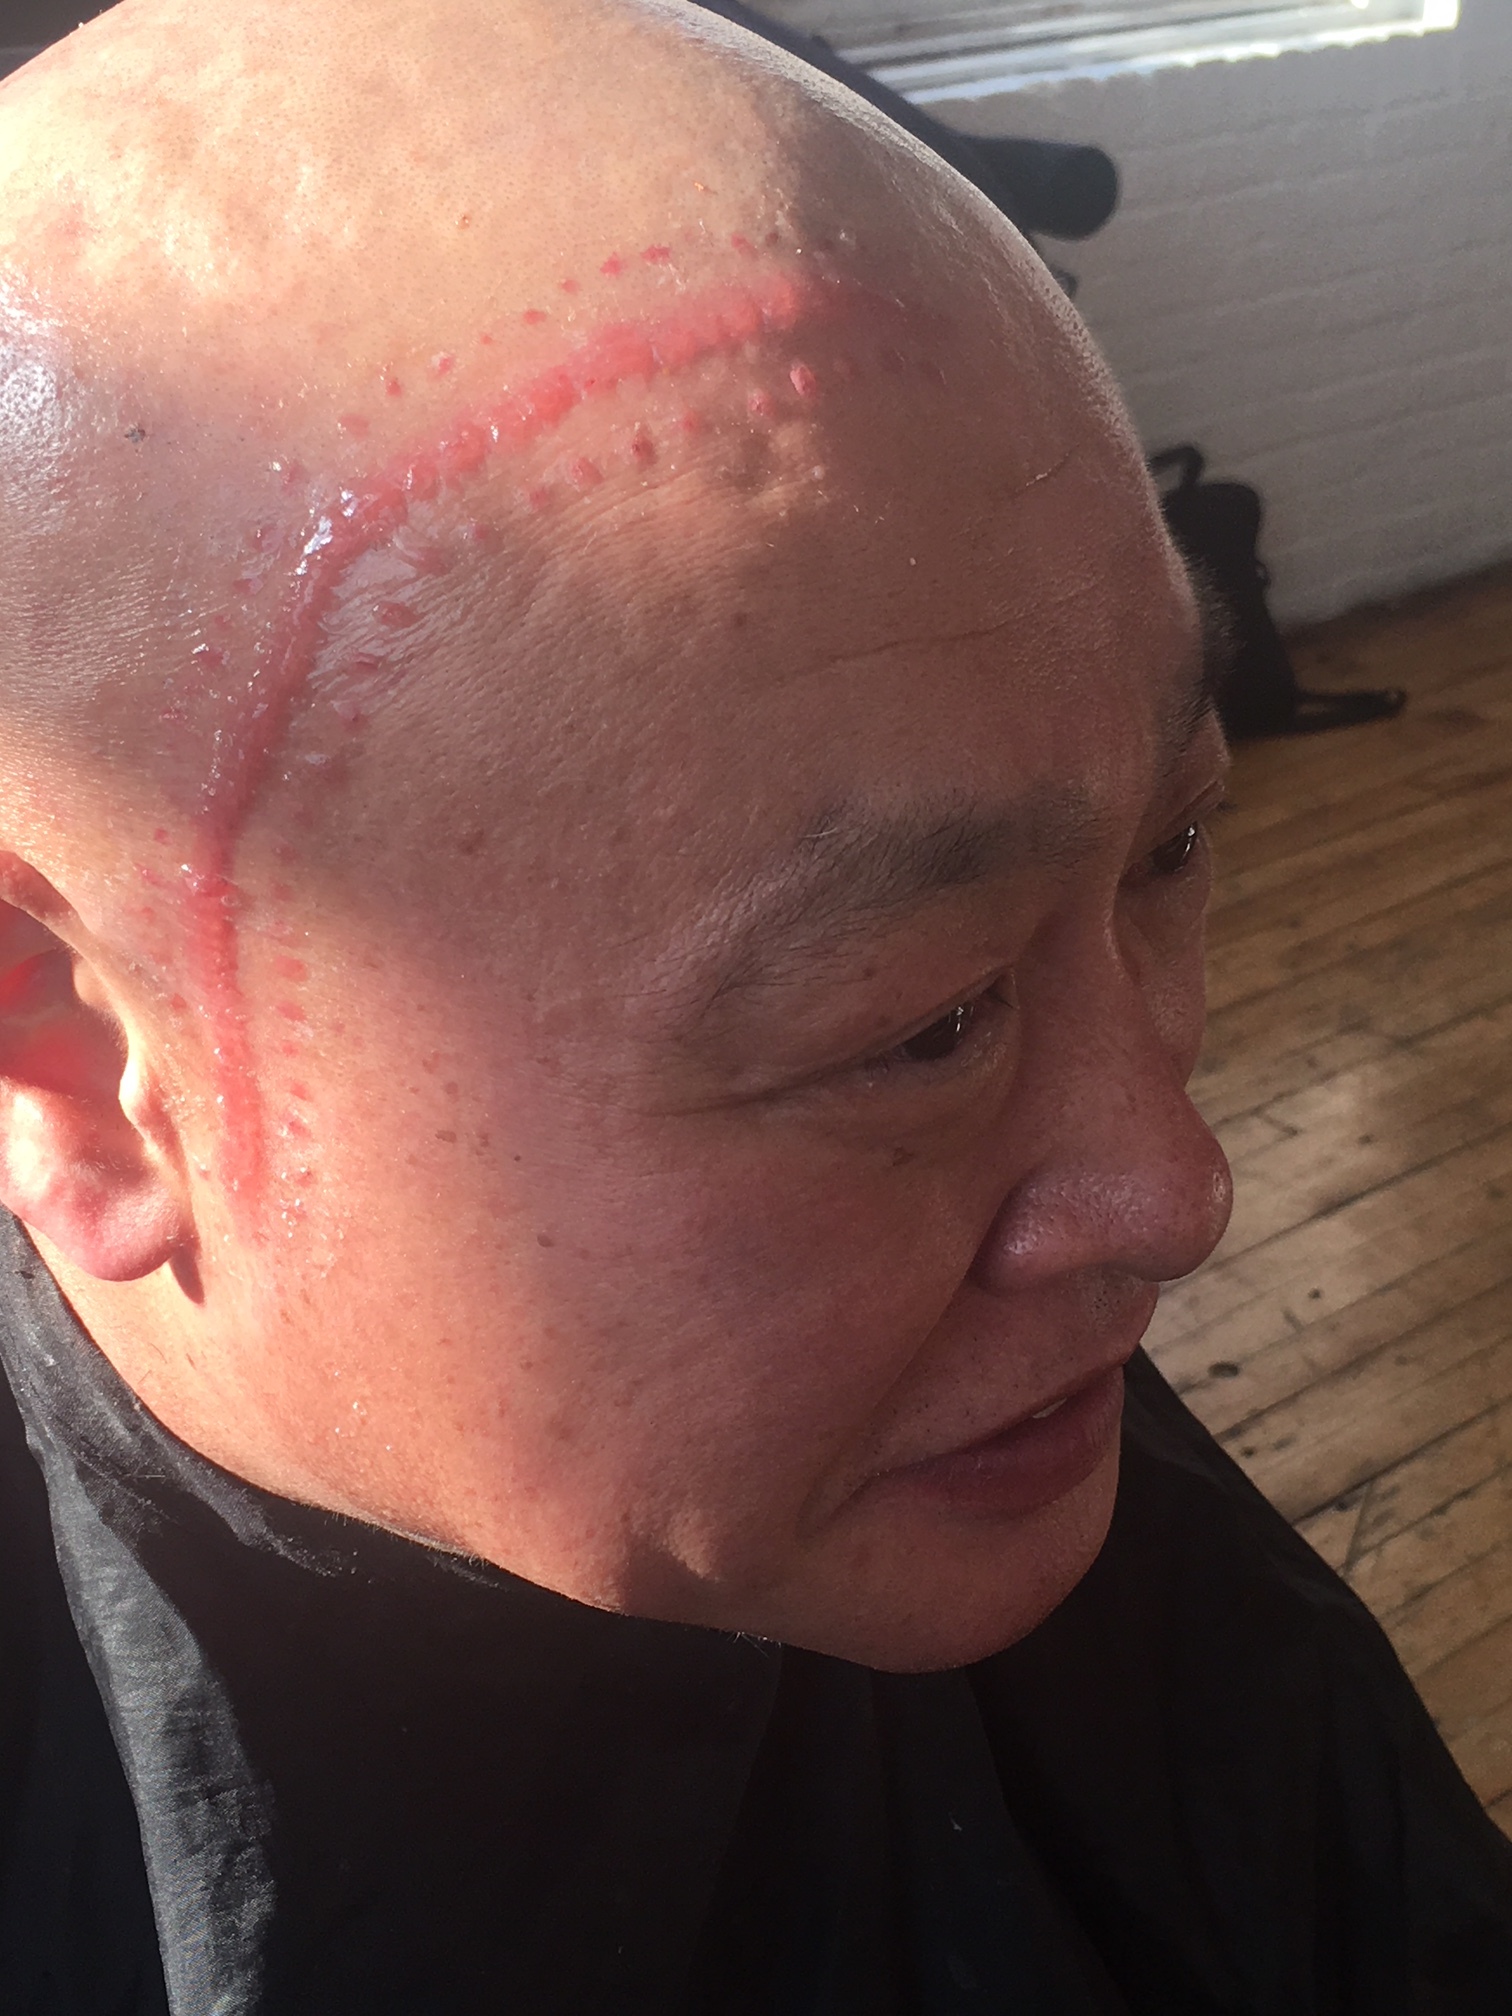 Healing 'brain surgery scar'